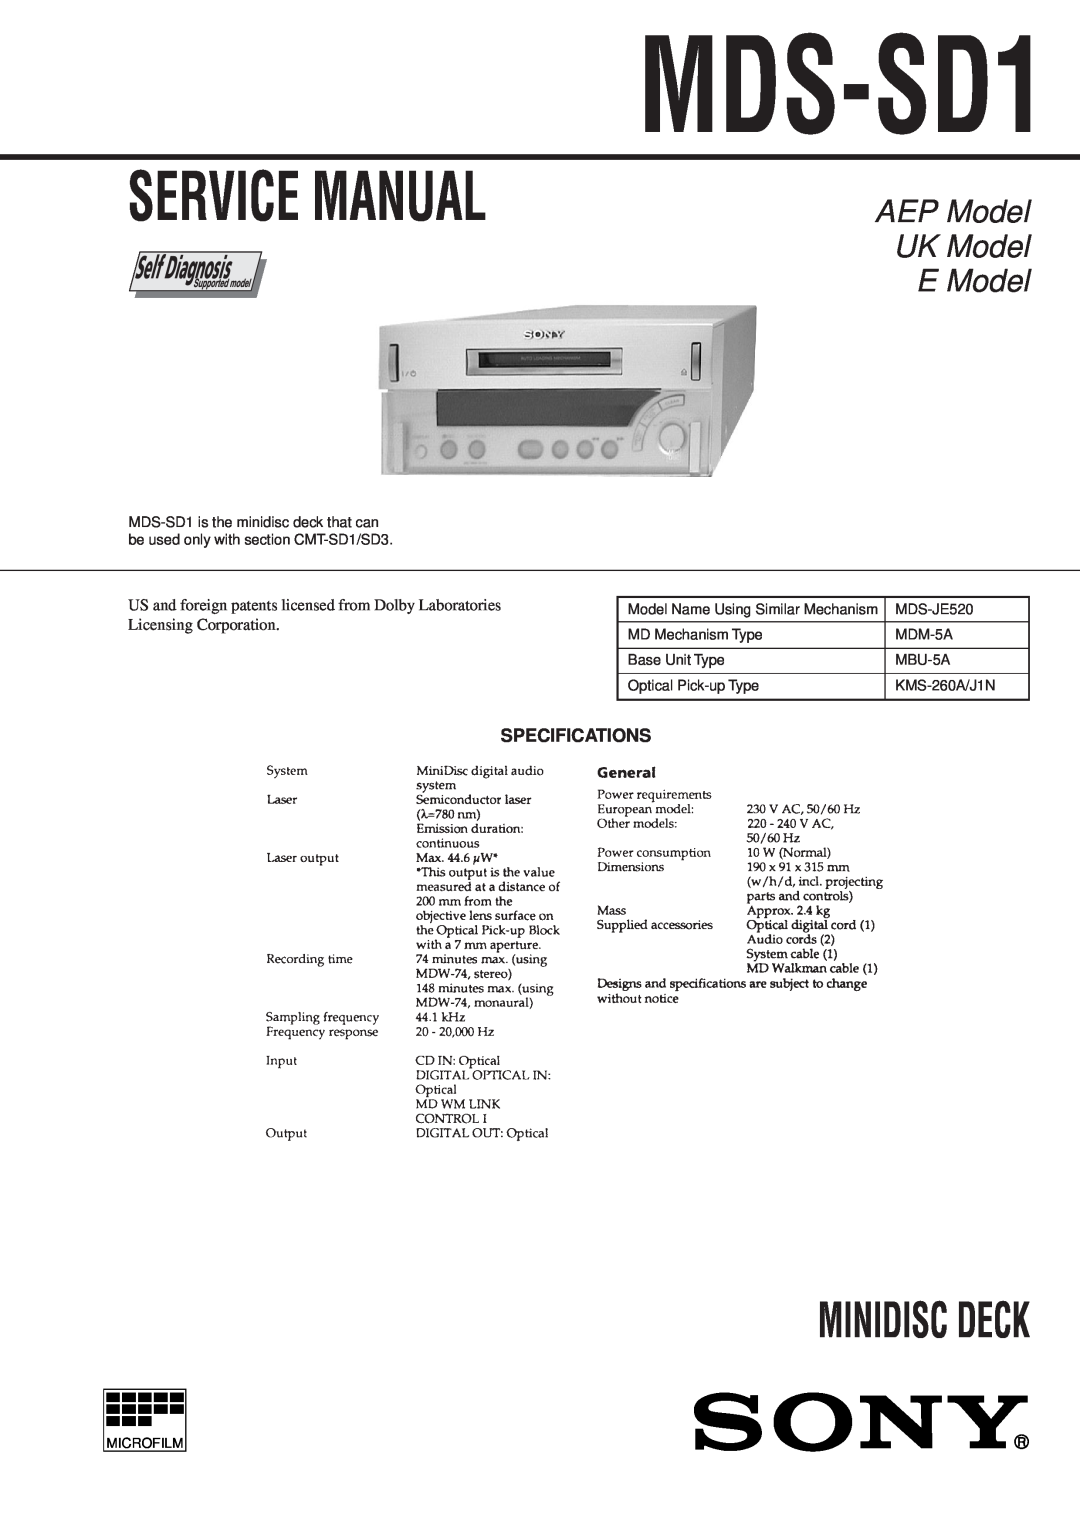 Sony MDS-SD1 service manual Specifications, Minidisc Deck, AEP Model UK Model E Model 